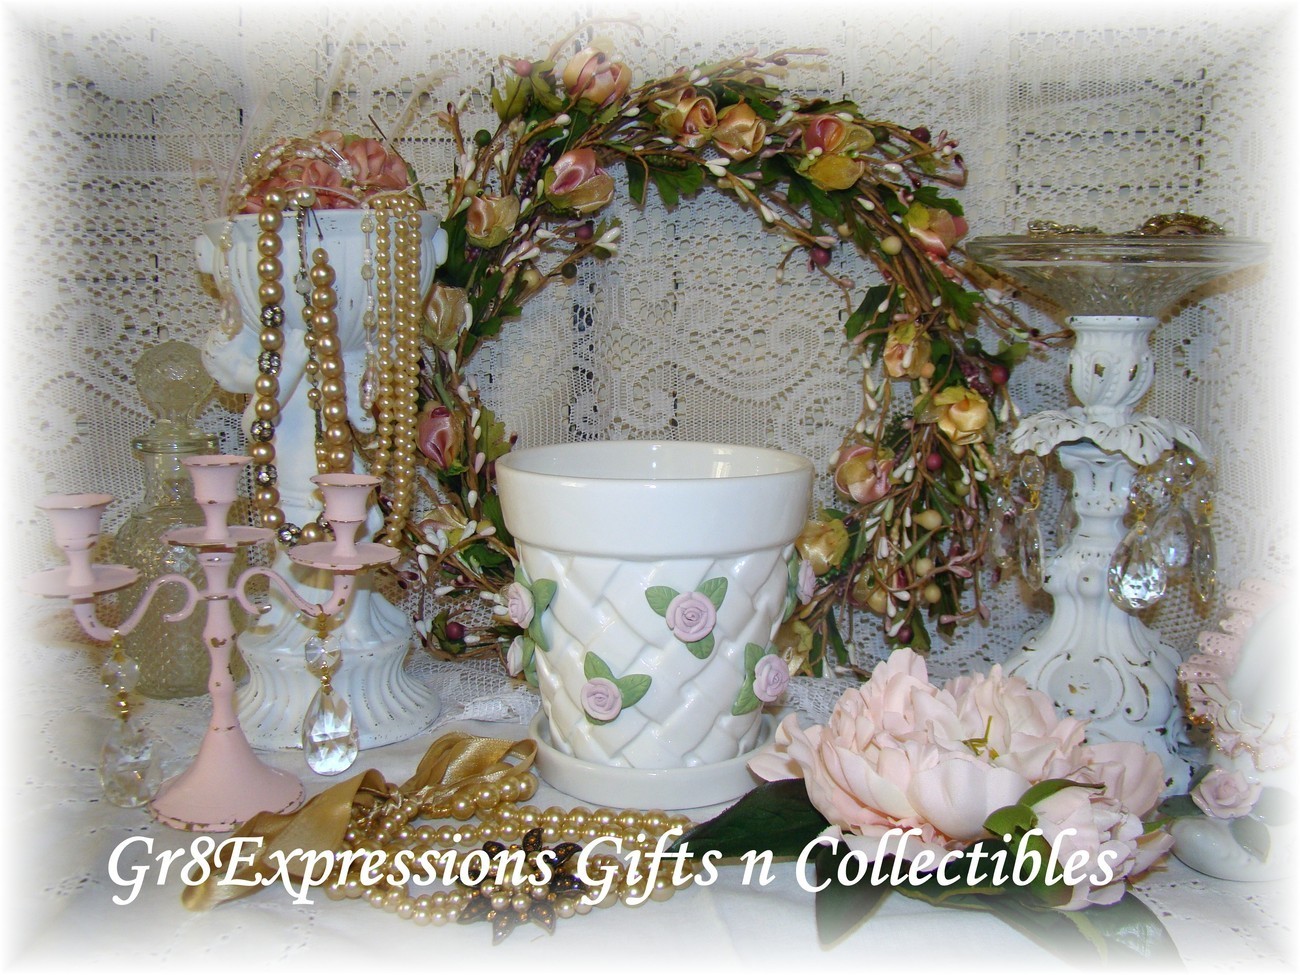 Shabby White Lattice Flower Pot~Applied Chic Pink Roses - $8.95